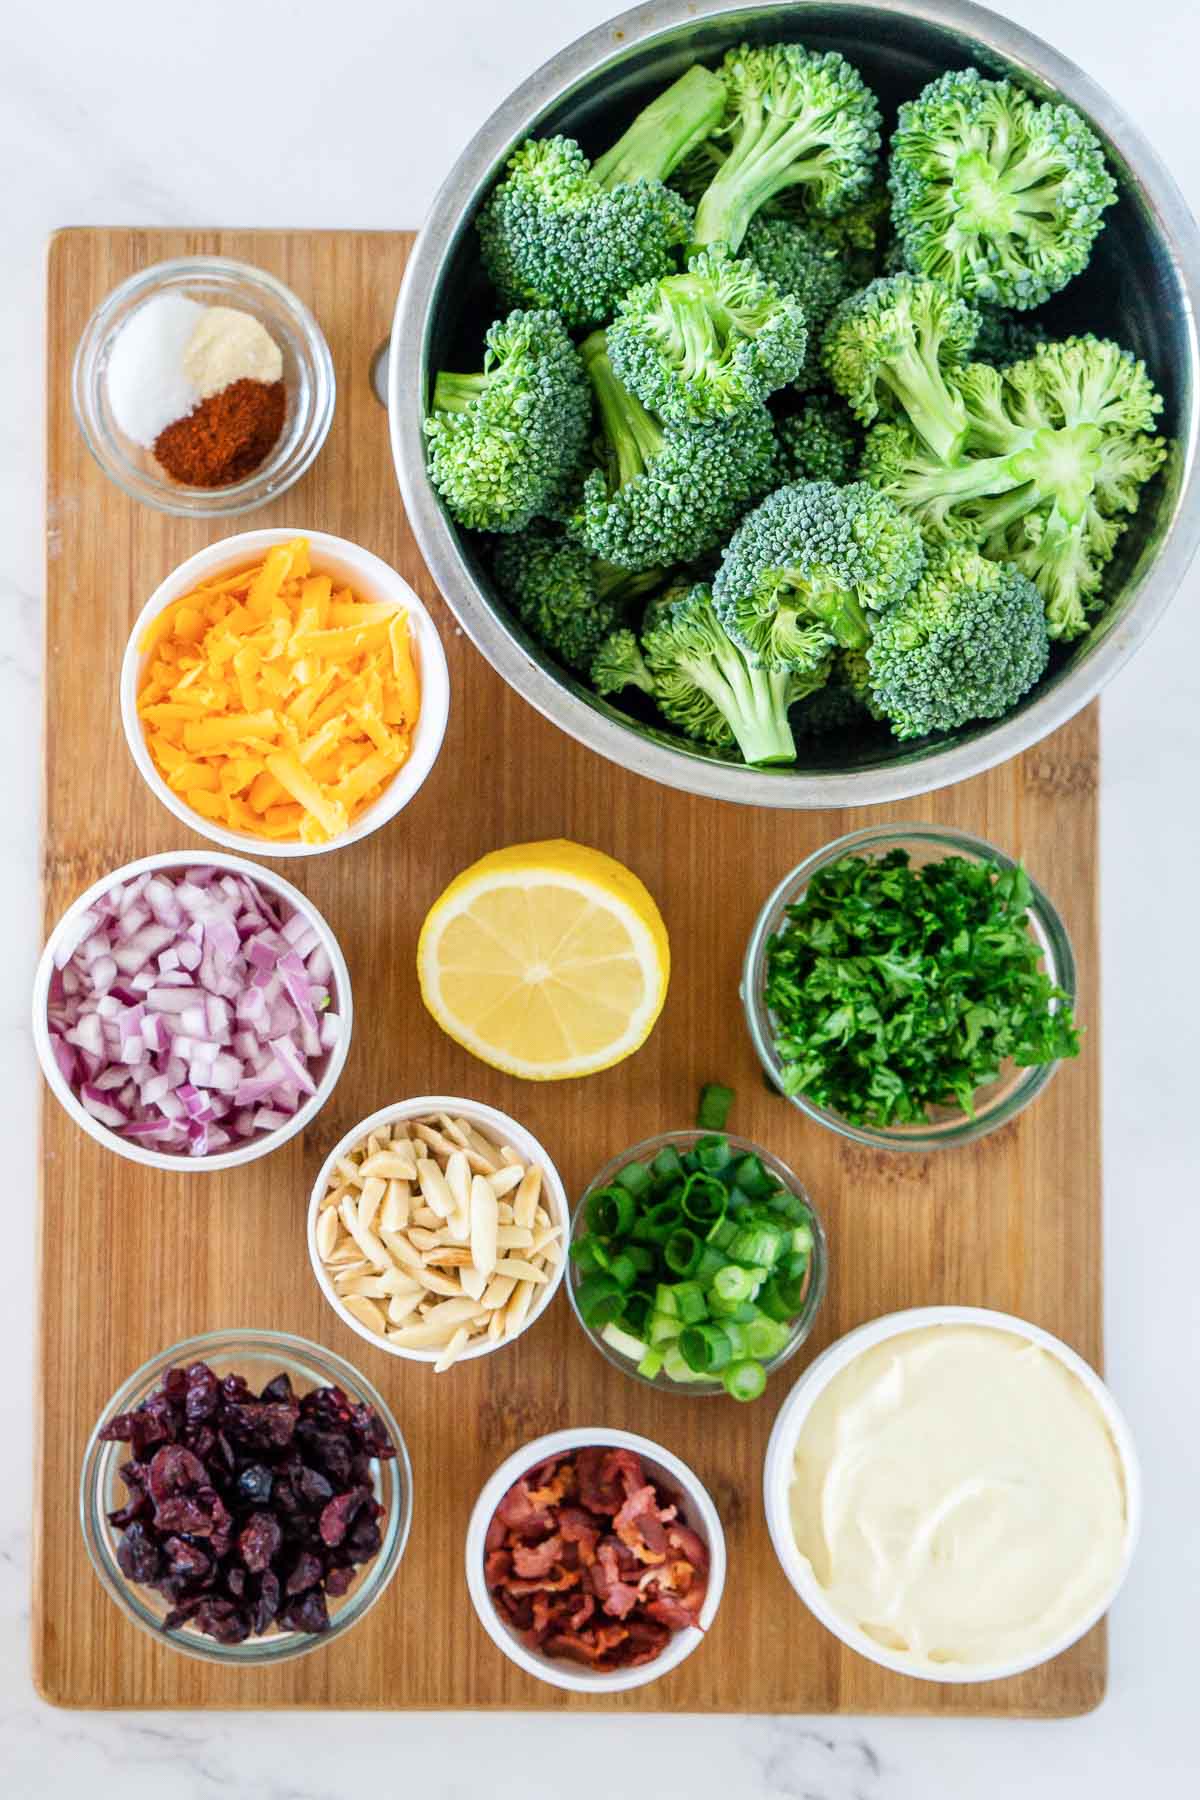 Ingredients to make broccoli salad.